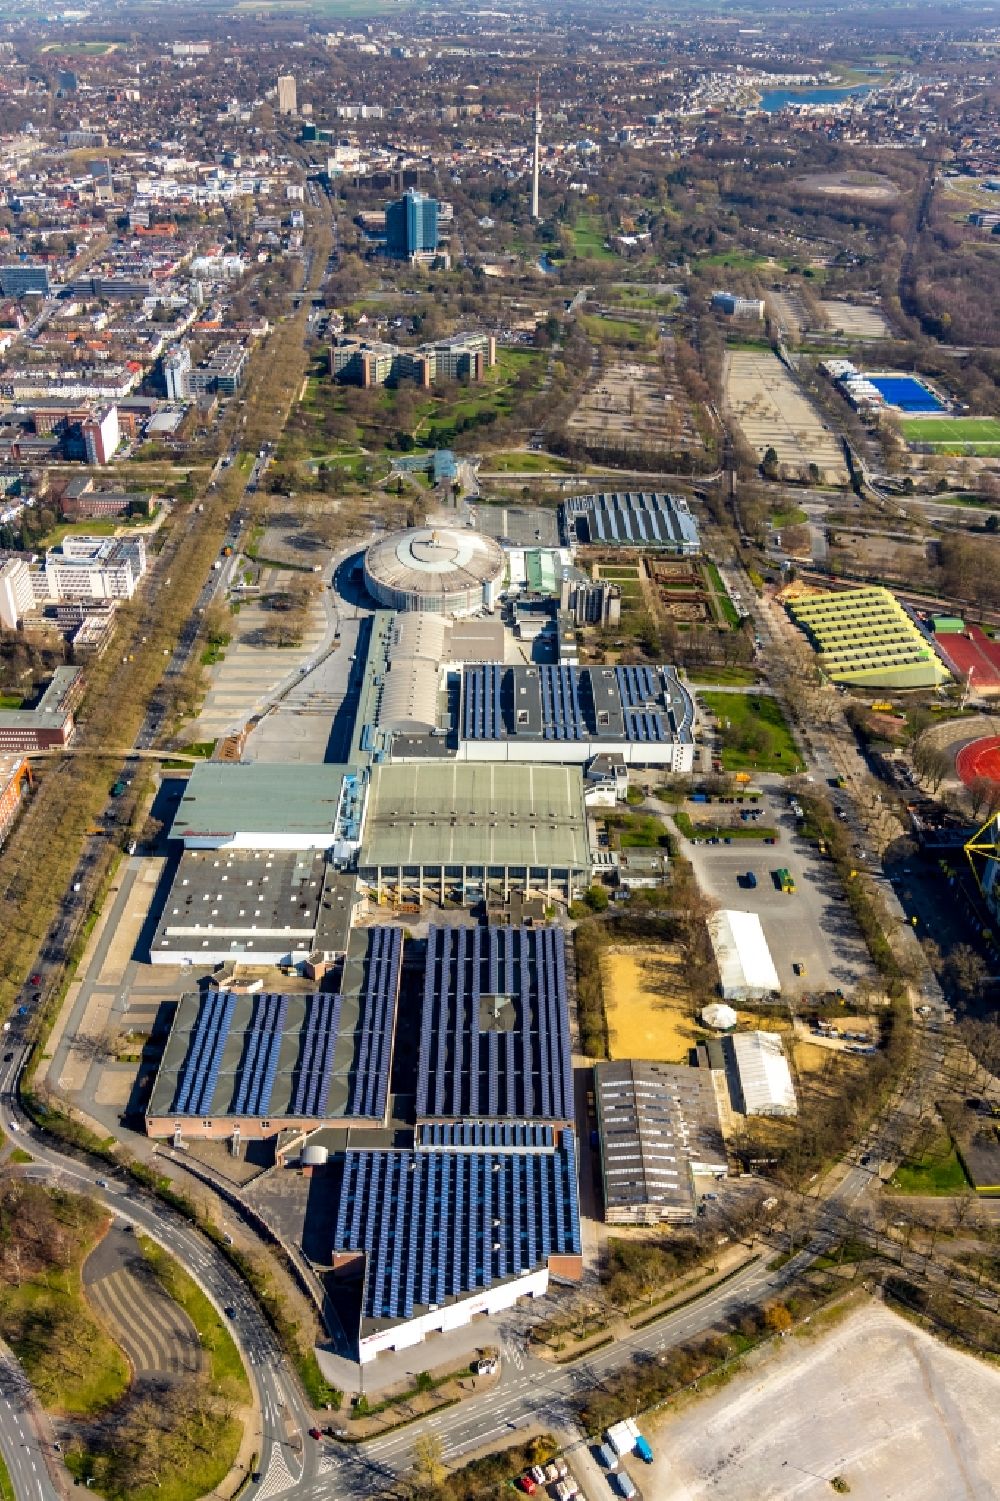 Aerial image Dortmund - Exhibition grounds, congress center and exhibition halls of the Westfalenhallen in Dortmund in the state of North Rhine-Westphalia